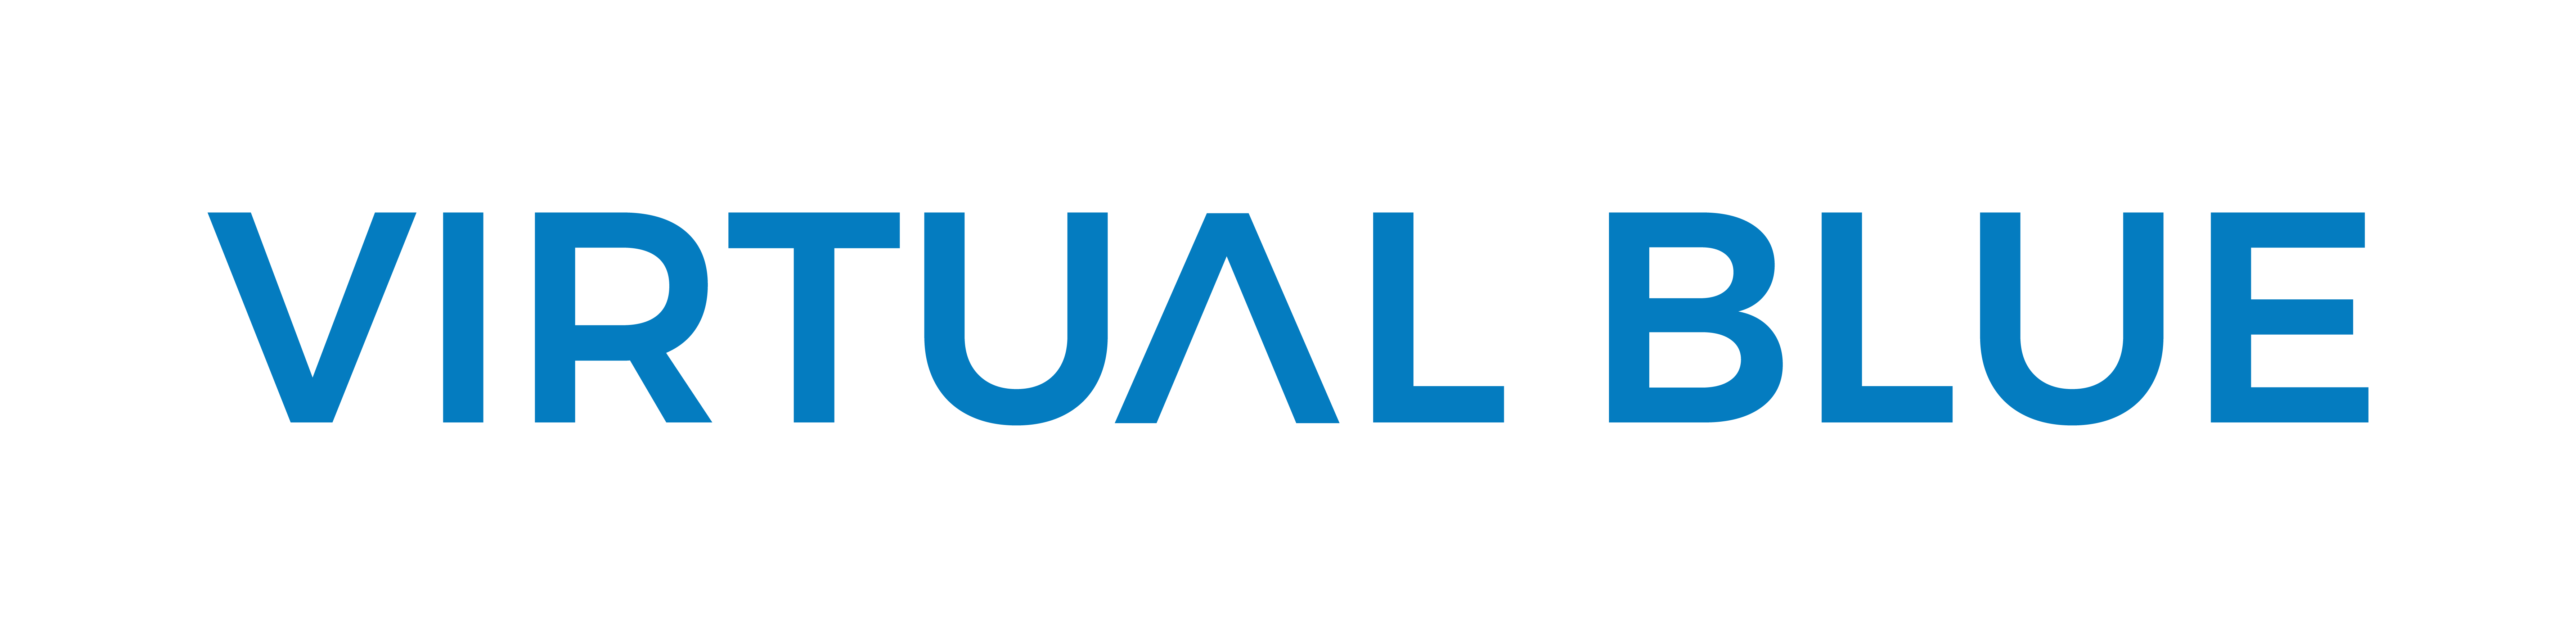 Virtual Blue Logo Blue-copy